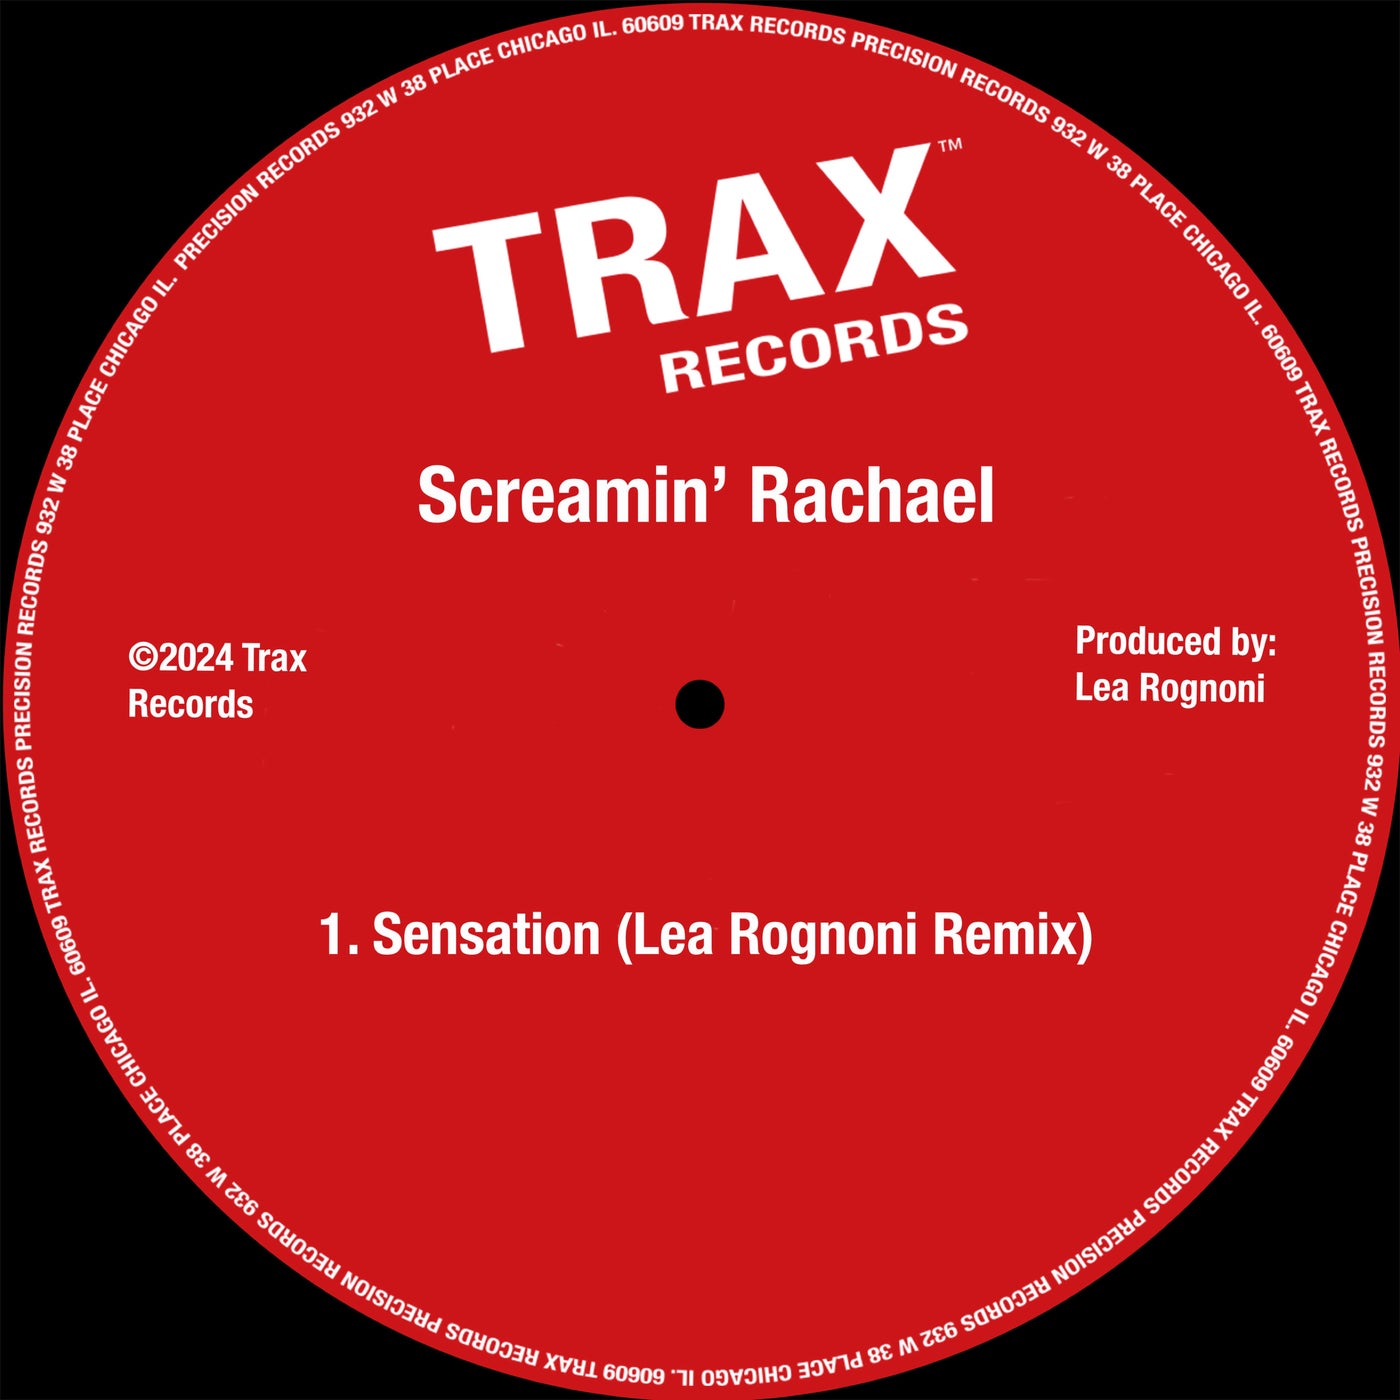 Sensation (Lea Rognoni Remix)